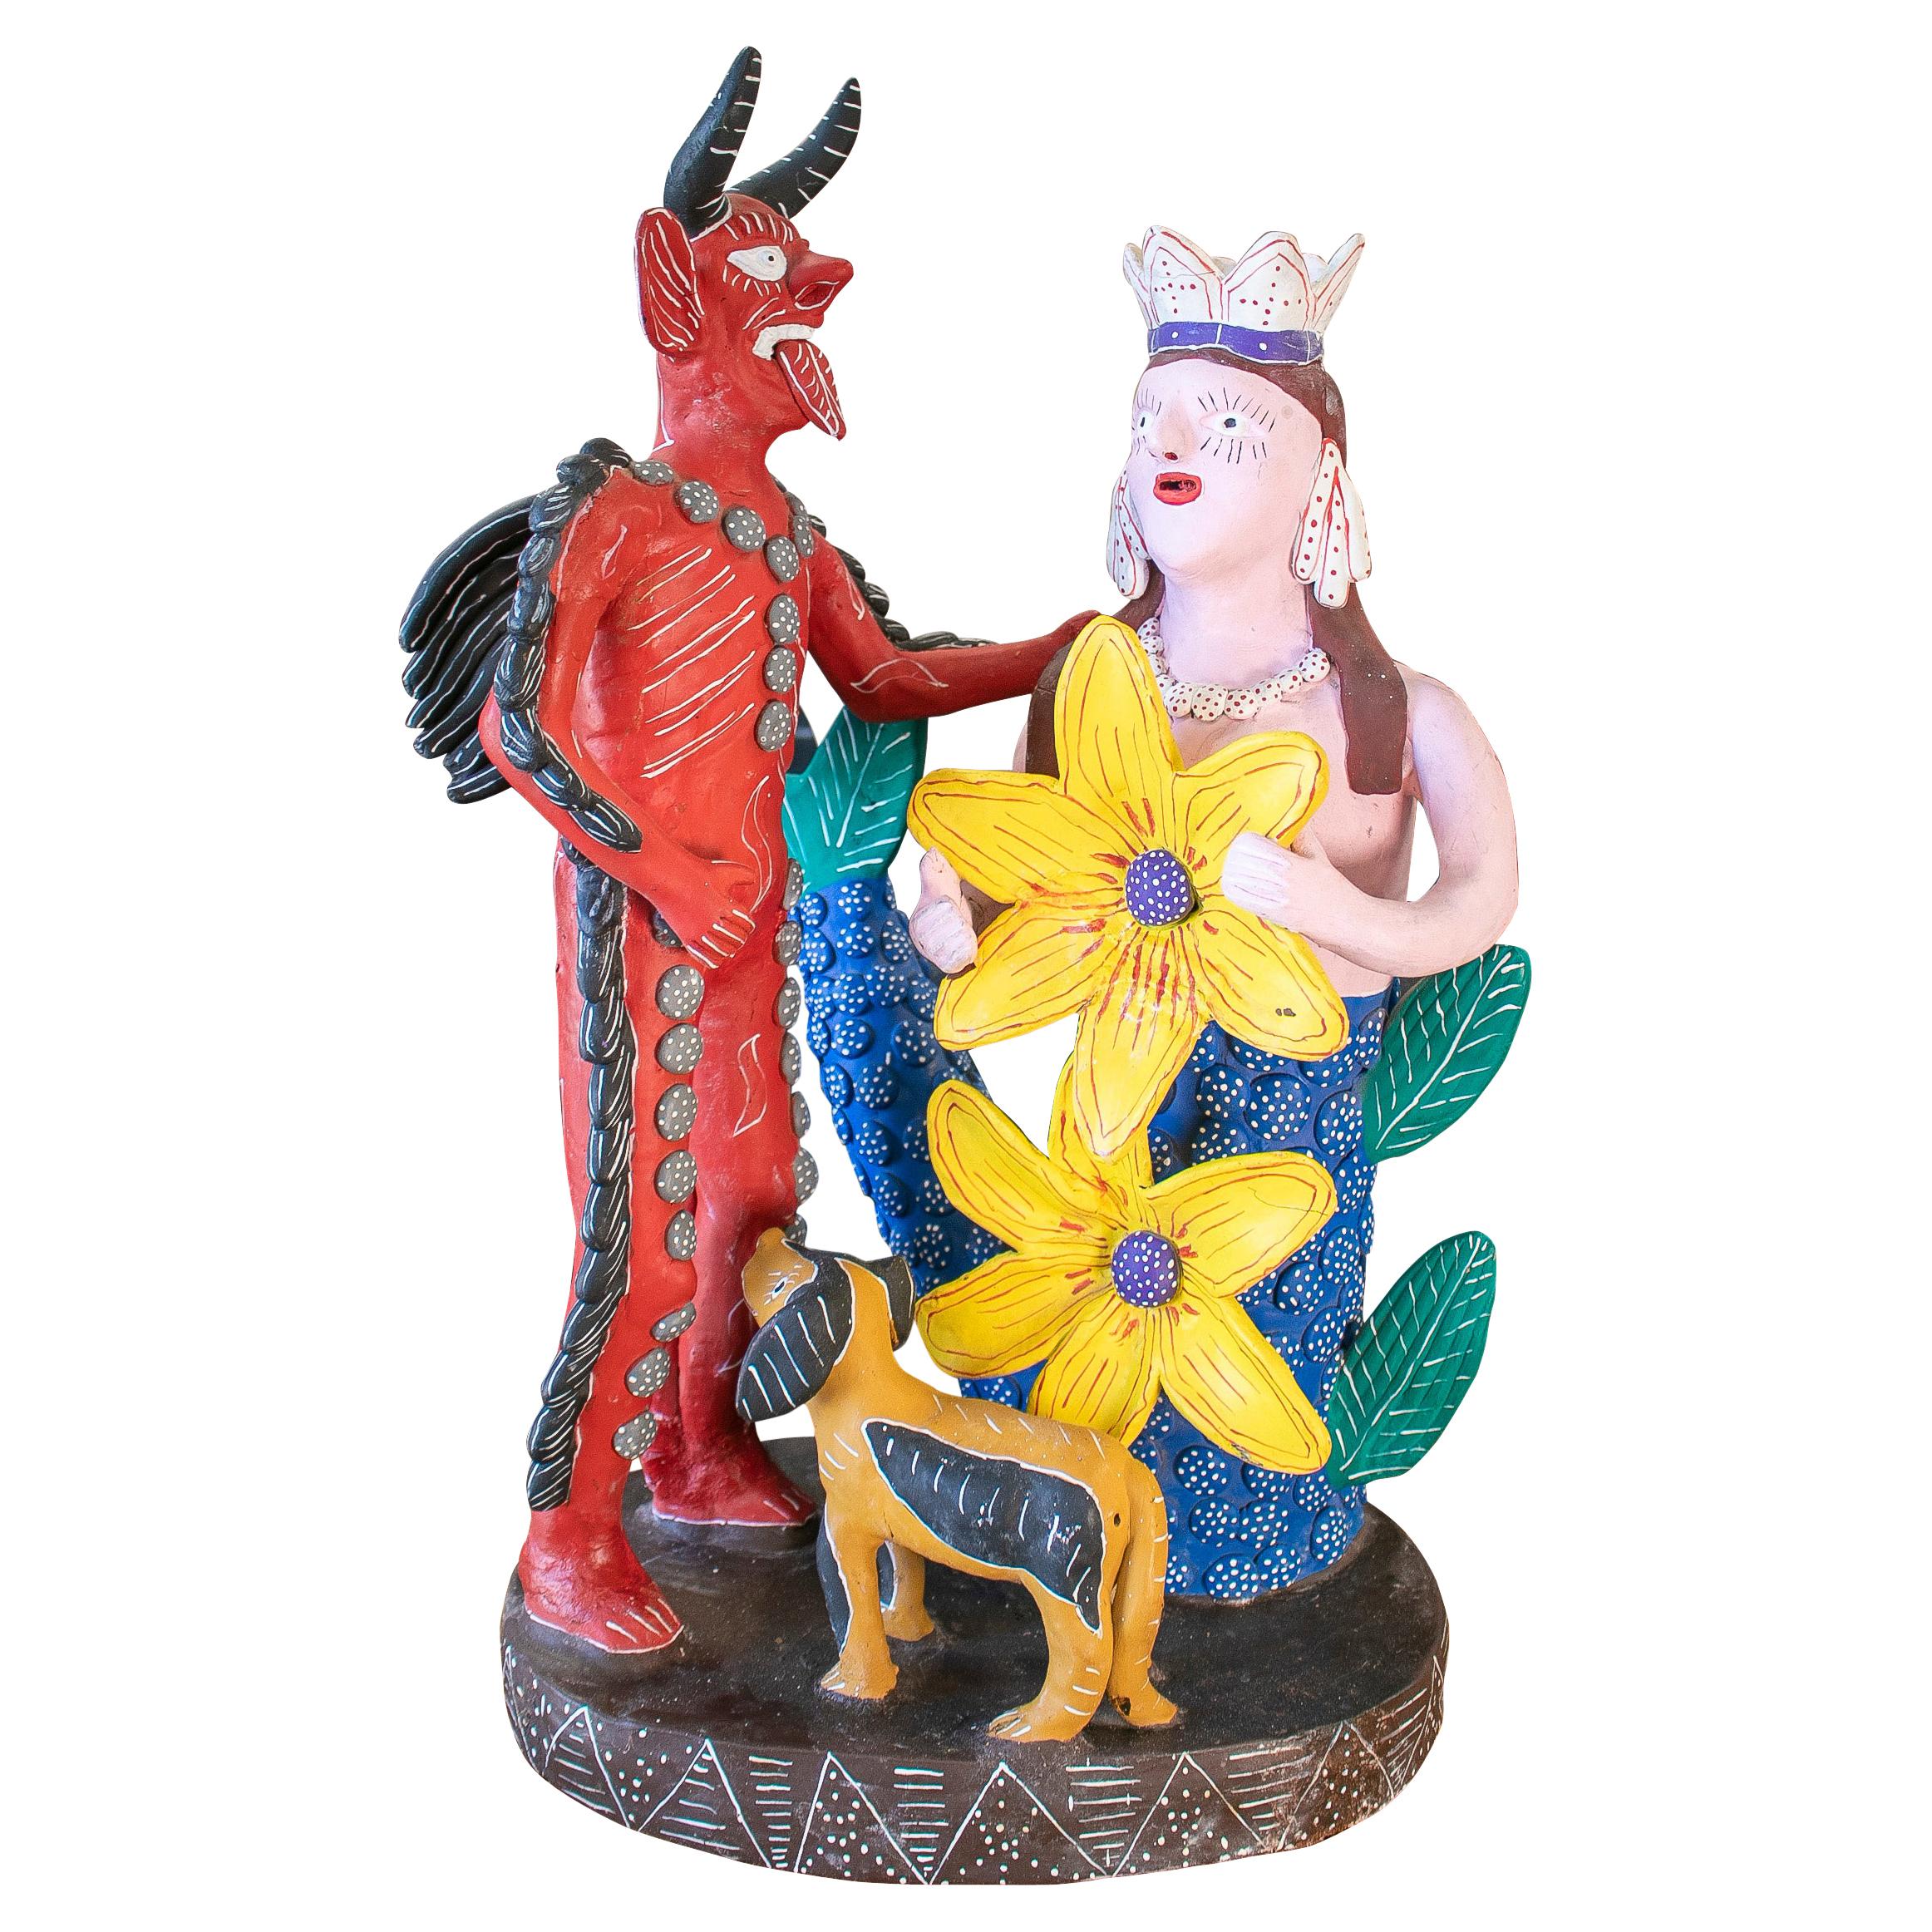 Bunte mexikanische handgefertigte Terrakotta-Skulptur mit Dämonen- und Meerjungfraufiguren